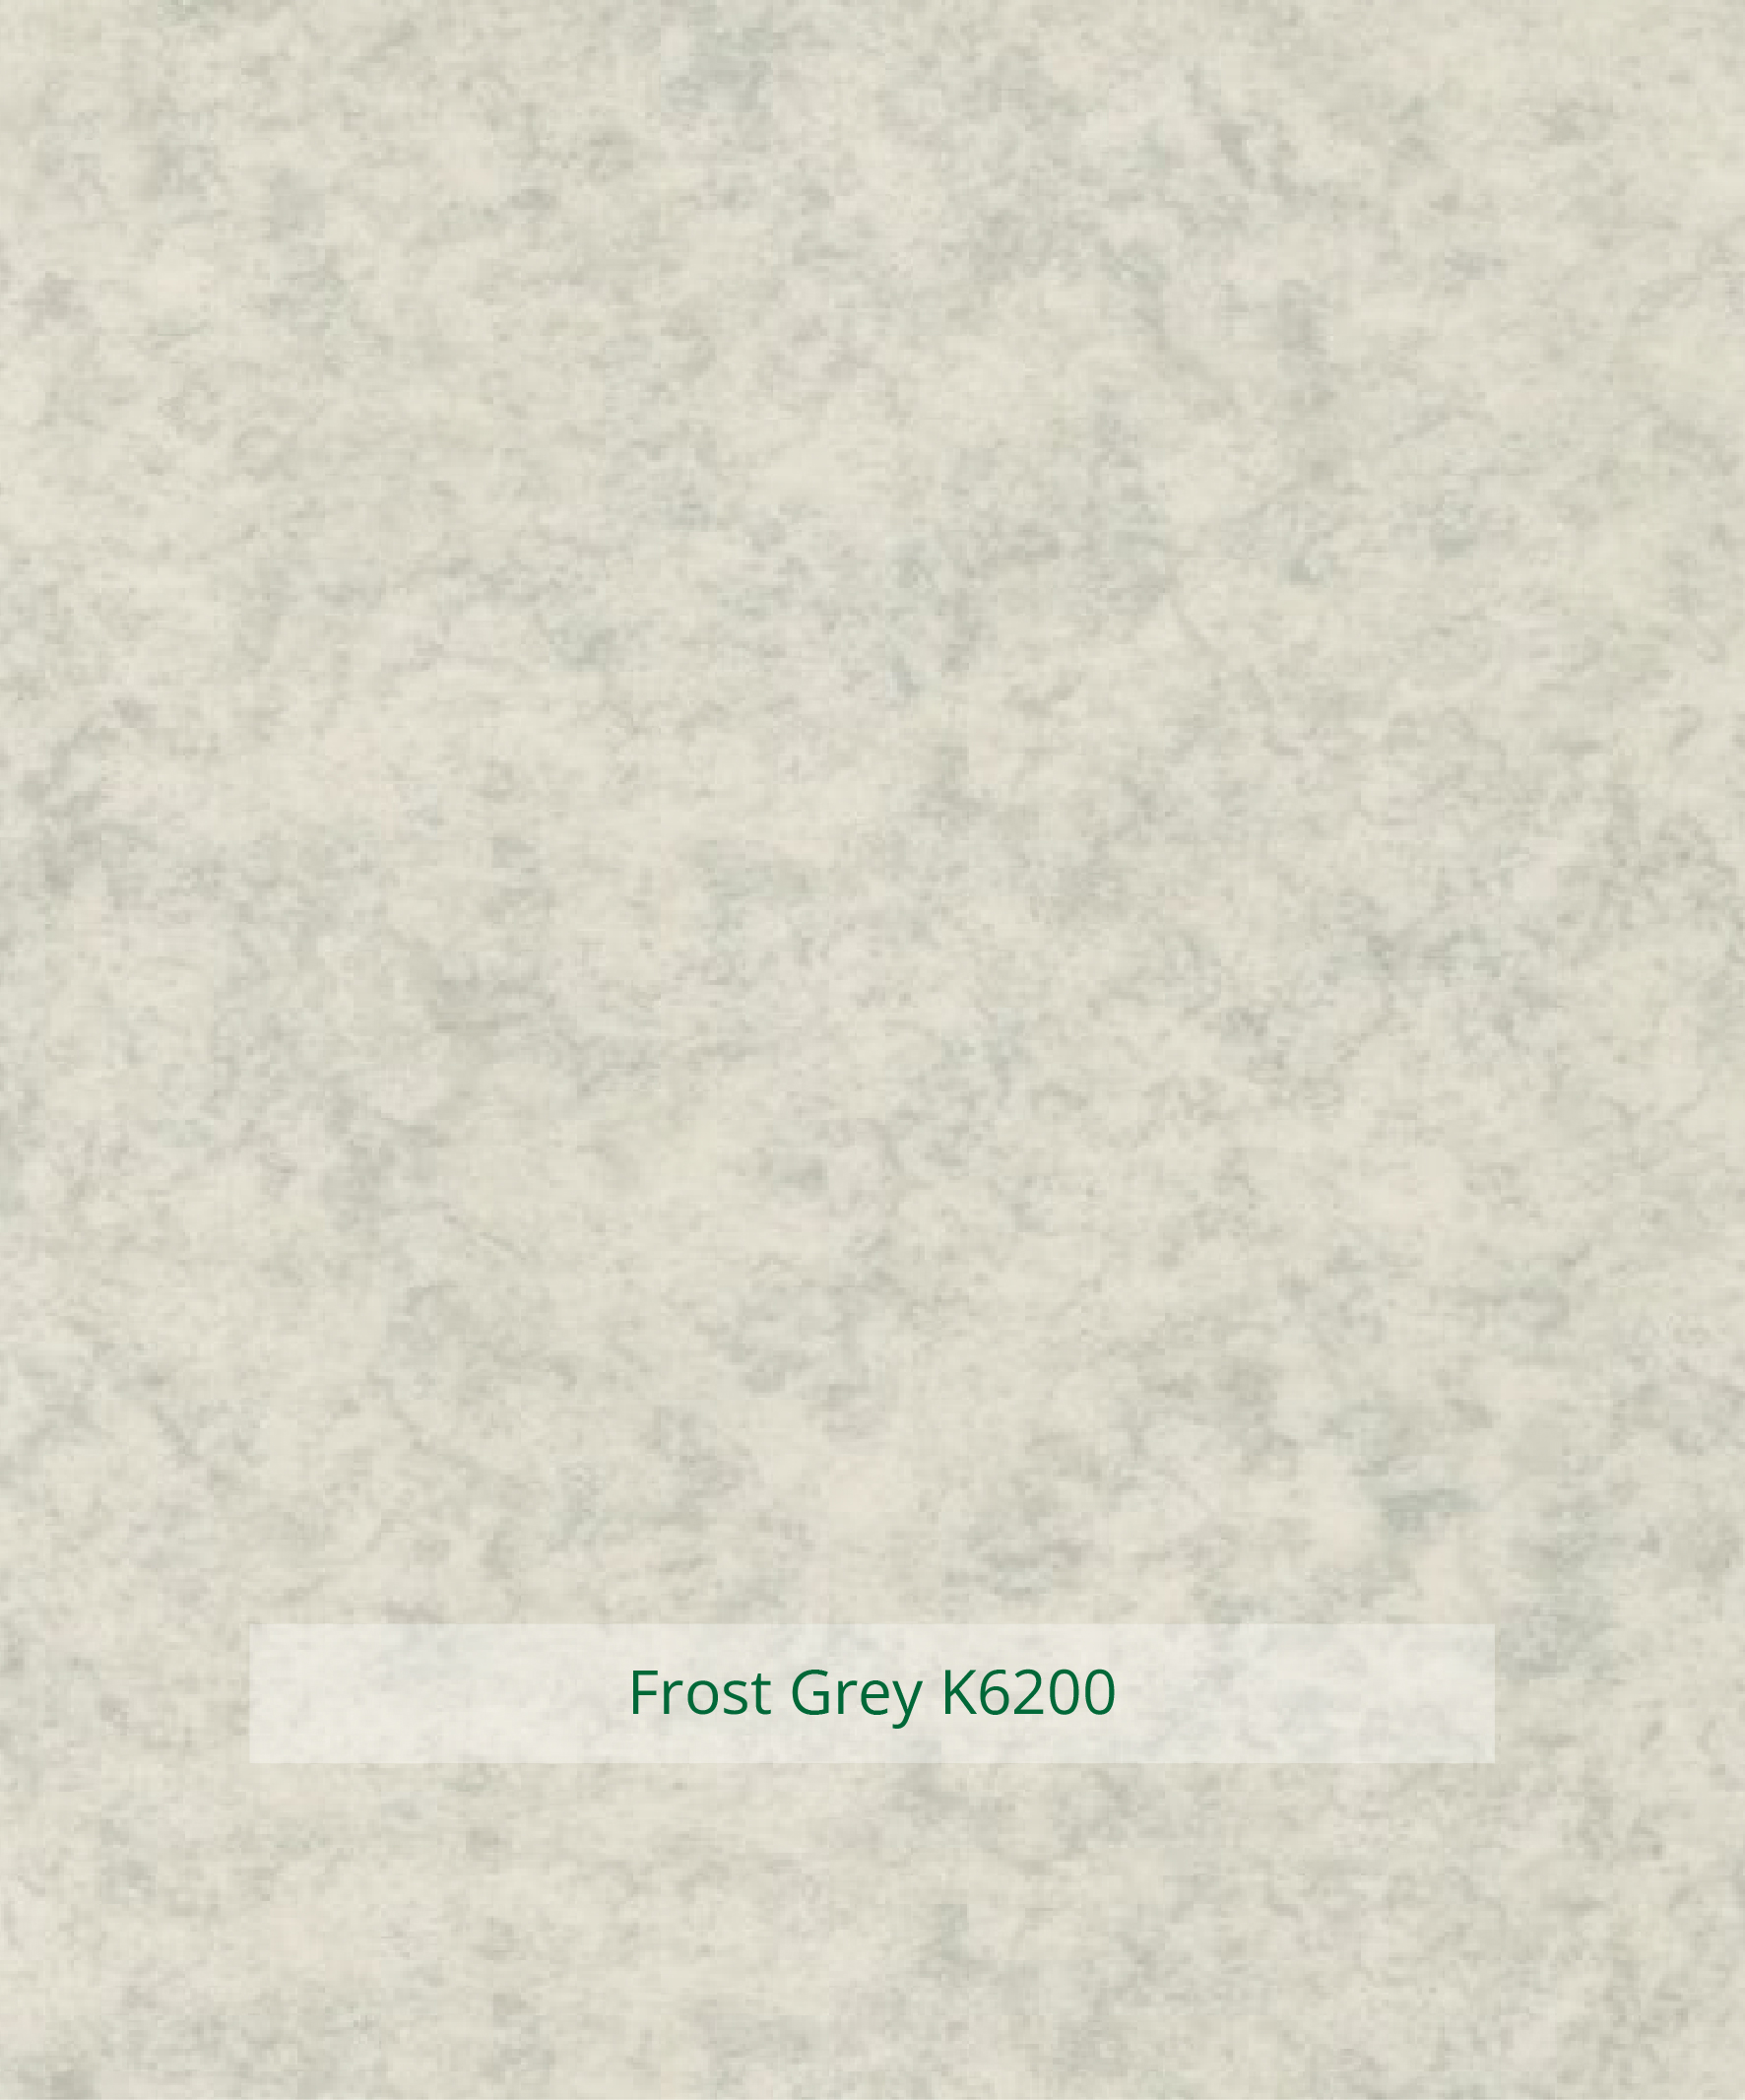 Timberline Frost Grey K6200